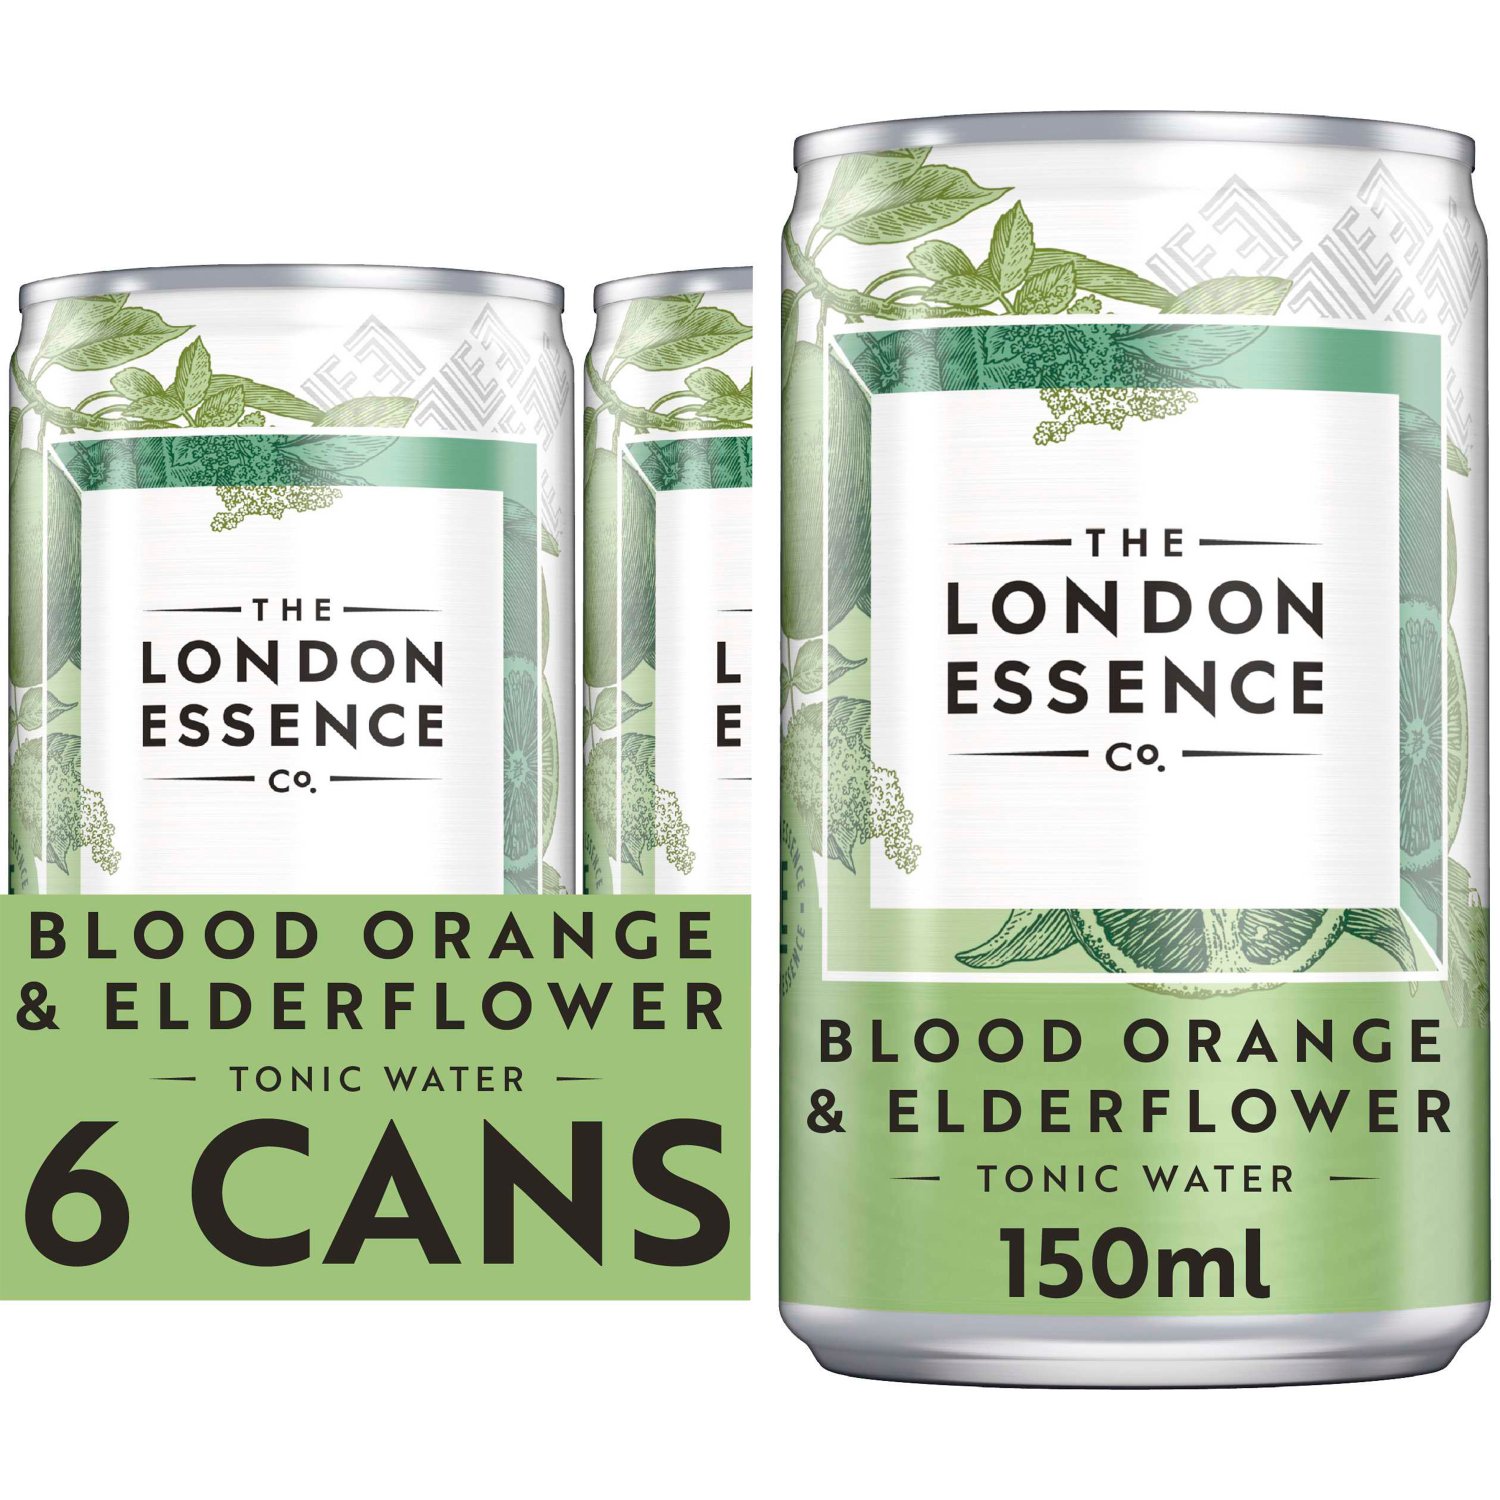 London Essence Blood Orange & Elderflower Tonic Water Cans 6 Pack (150 ml)